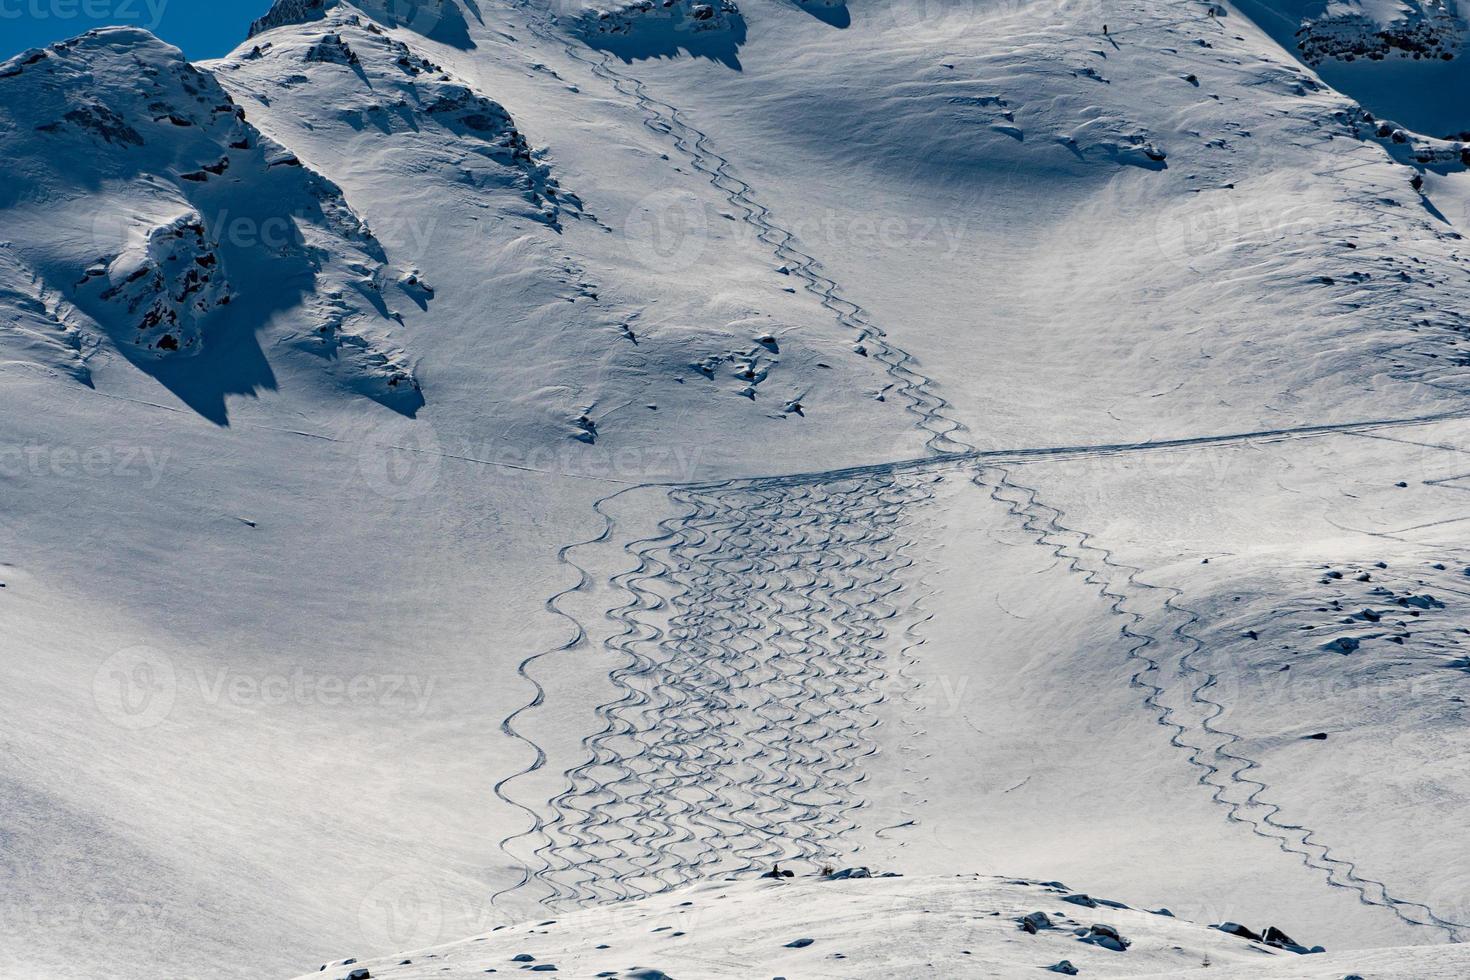 backcountry skiën trails sneeuw detail foto